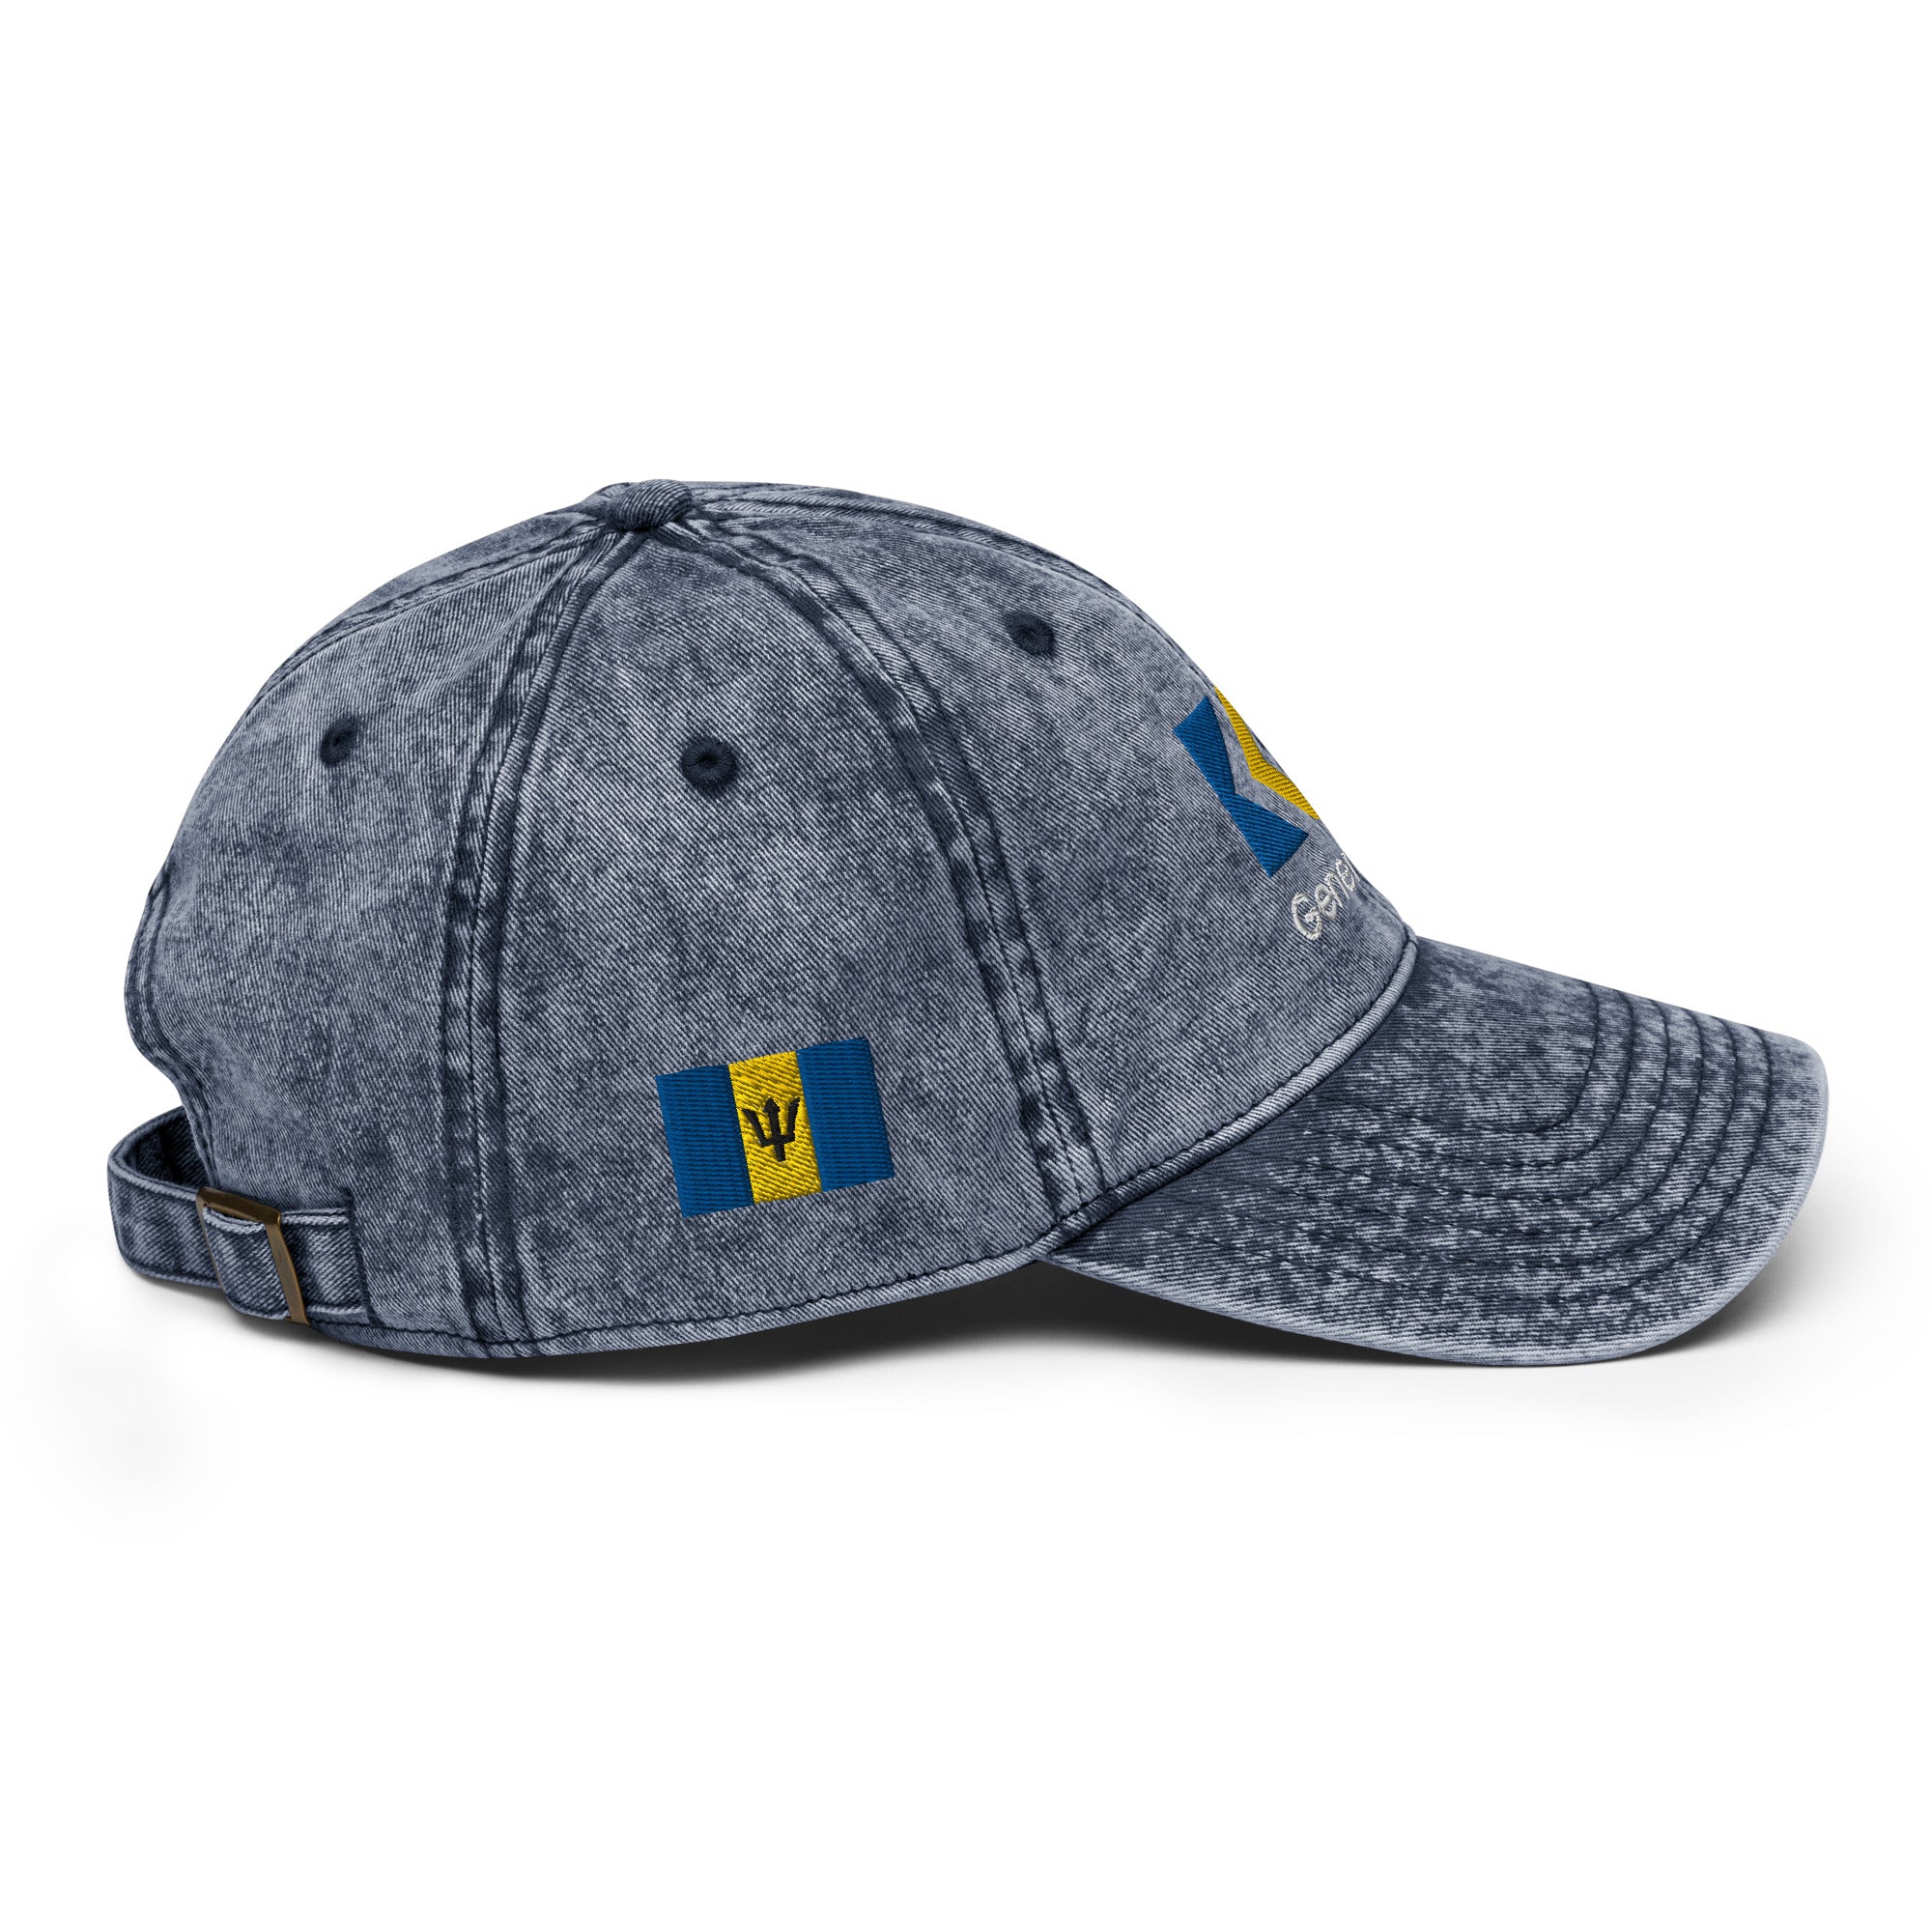 🇧🇧 Barbados KKKG Vintage Cotton Twill Cap